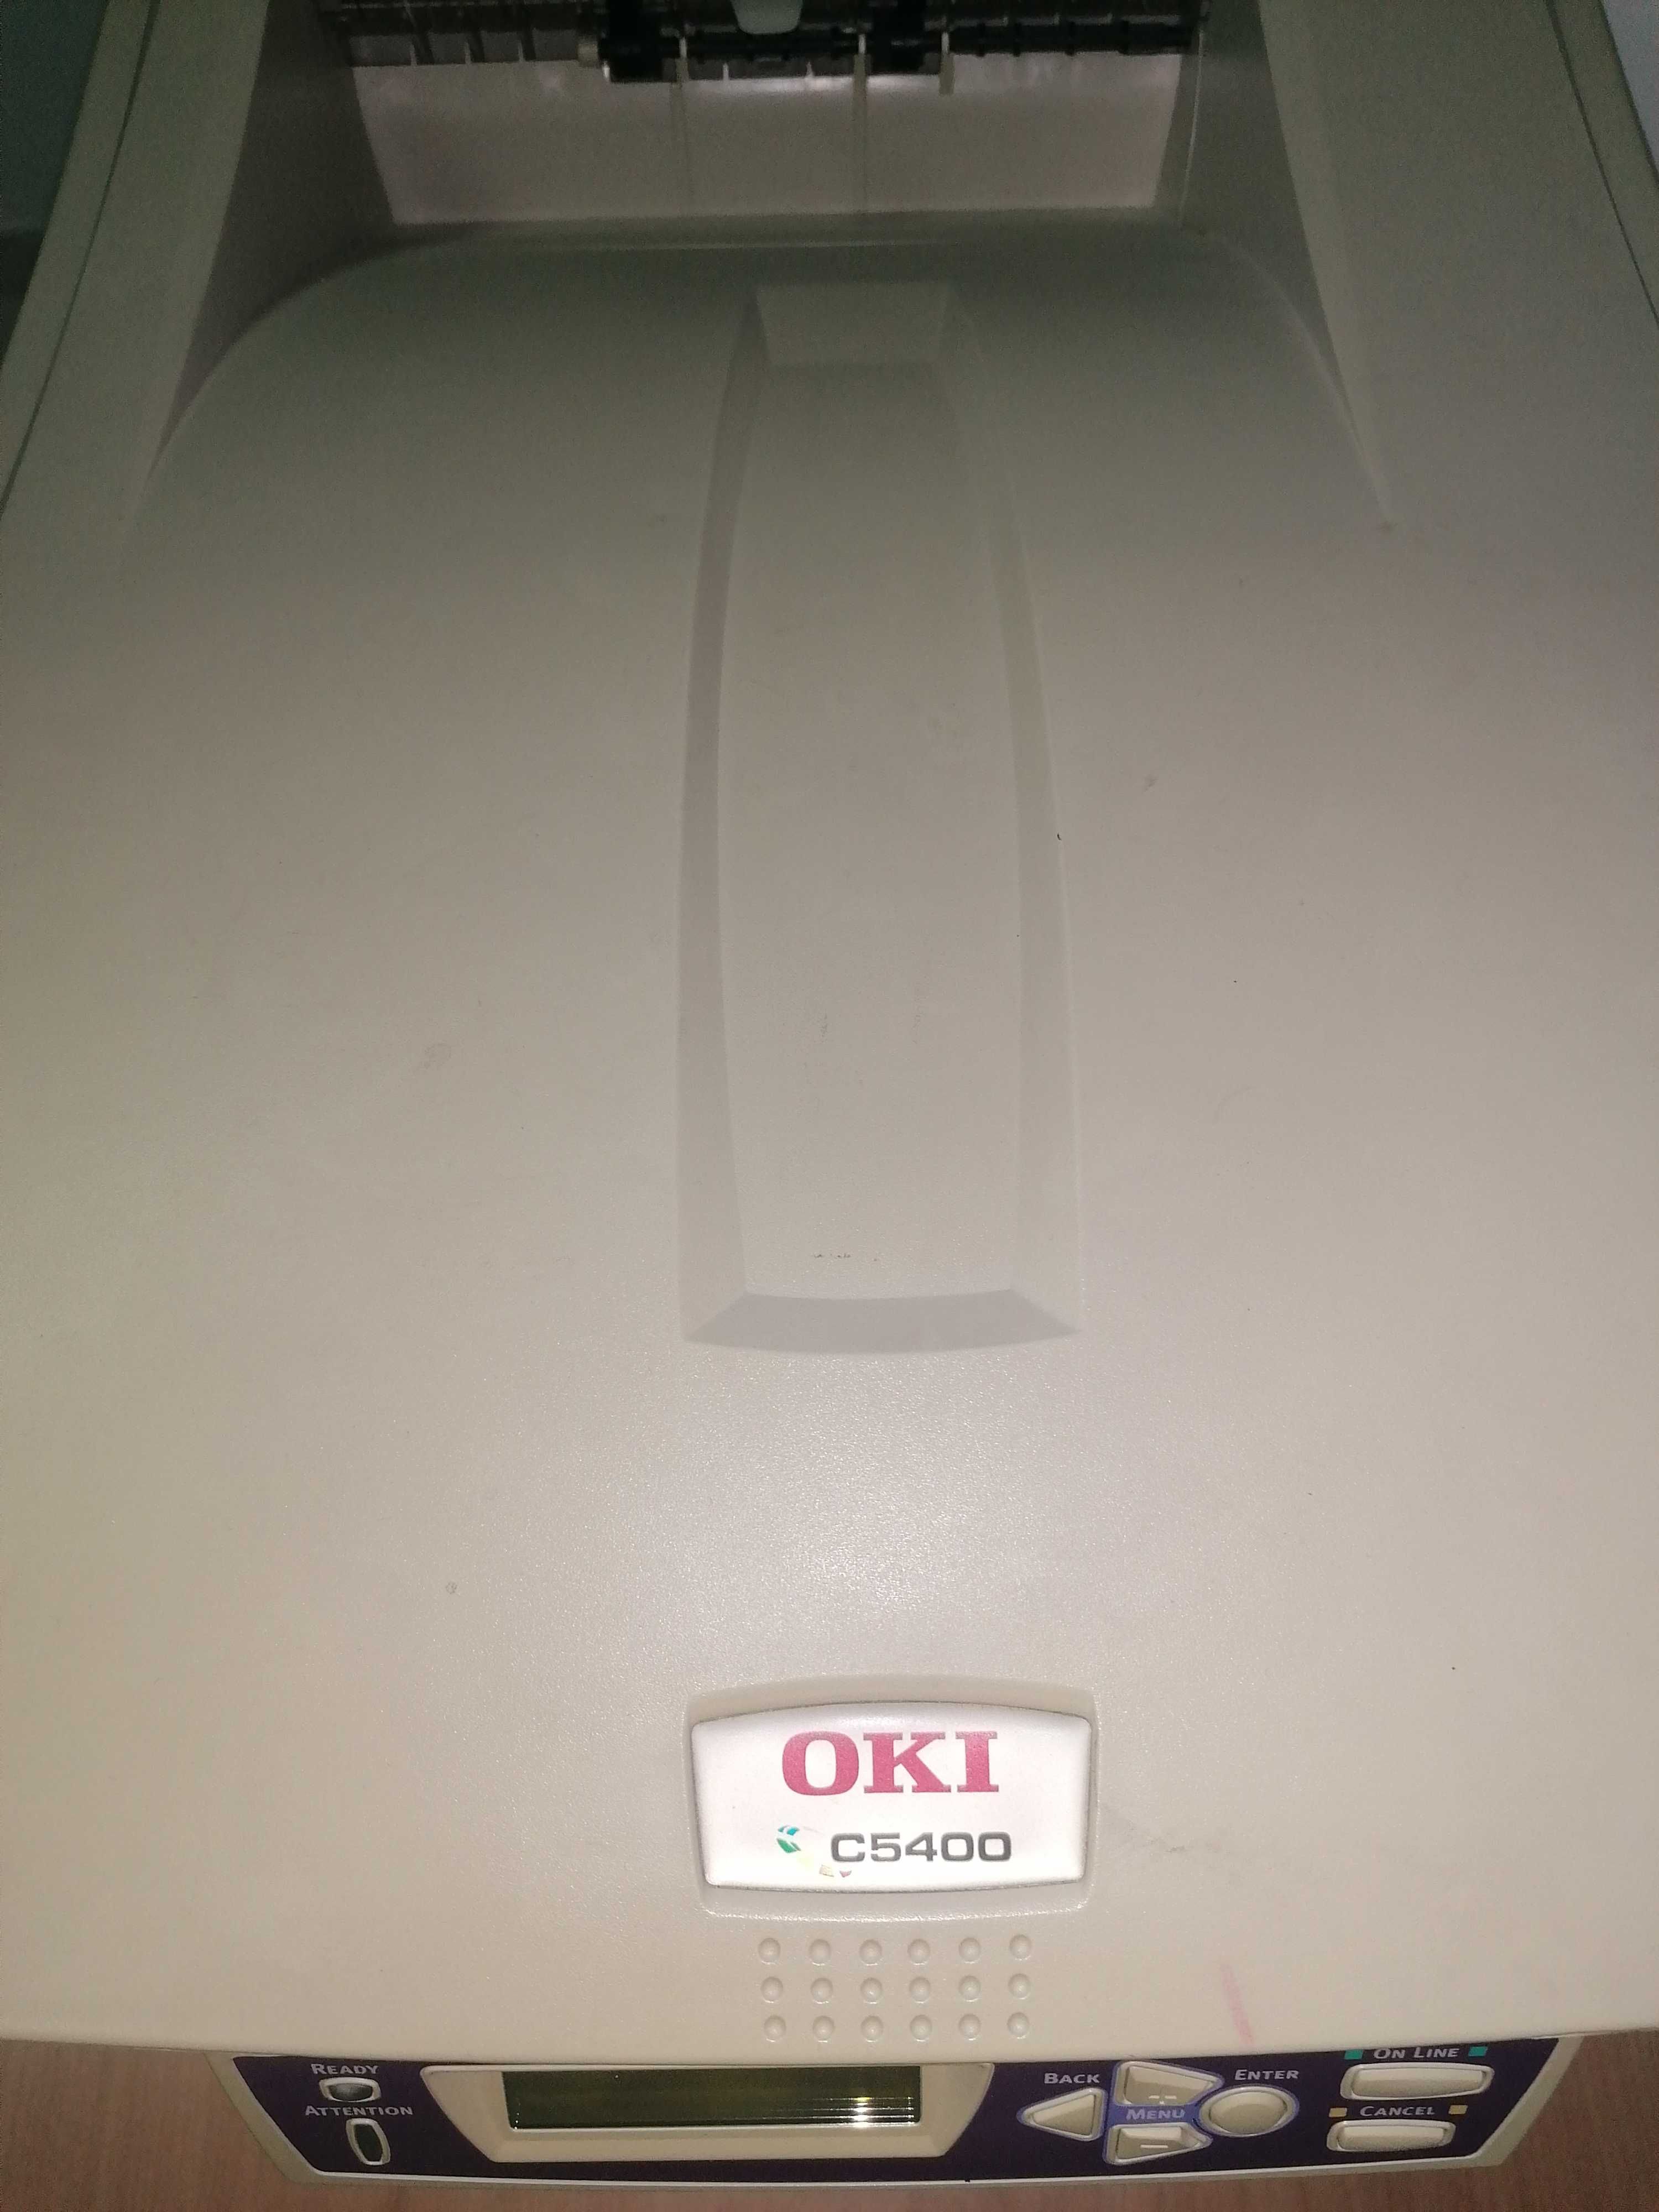 Impressora OKI C5400 N (Cores), bem estimada